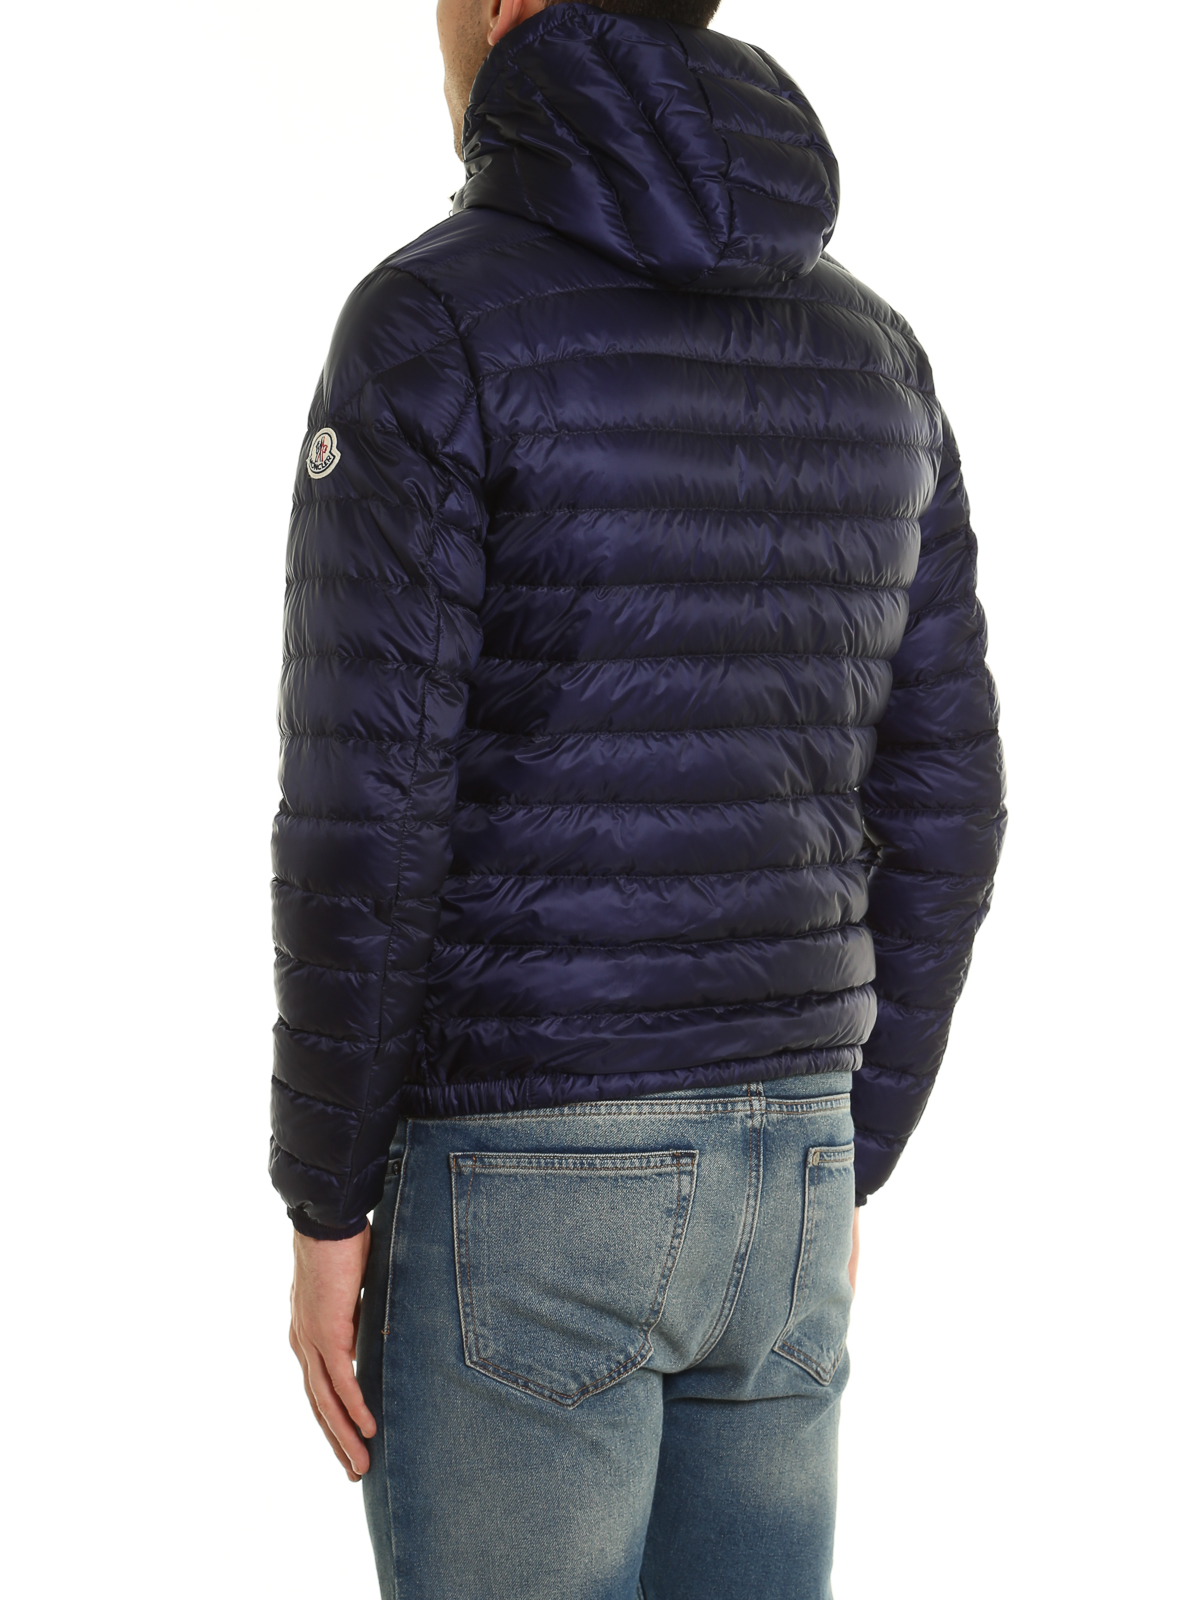 moncler hooded jacket - 64% remise 